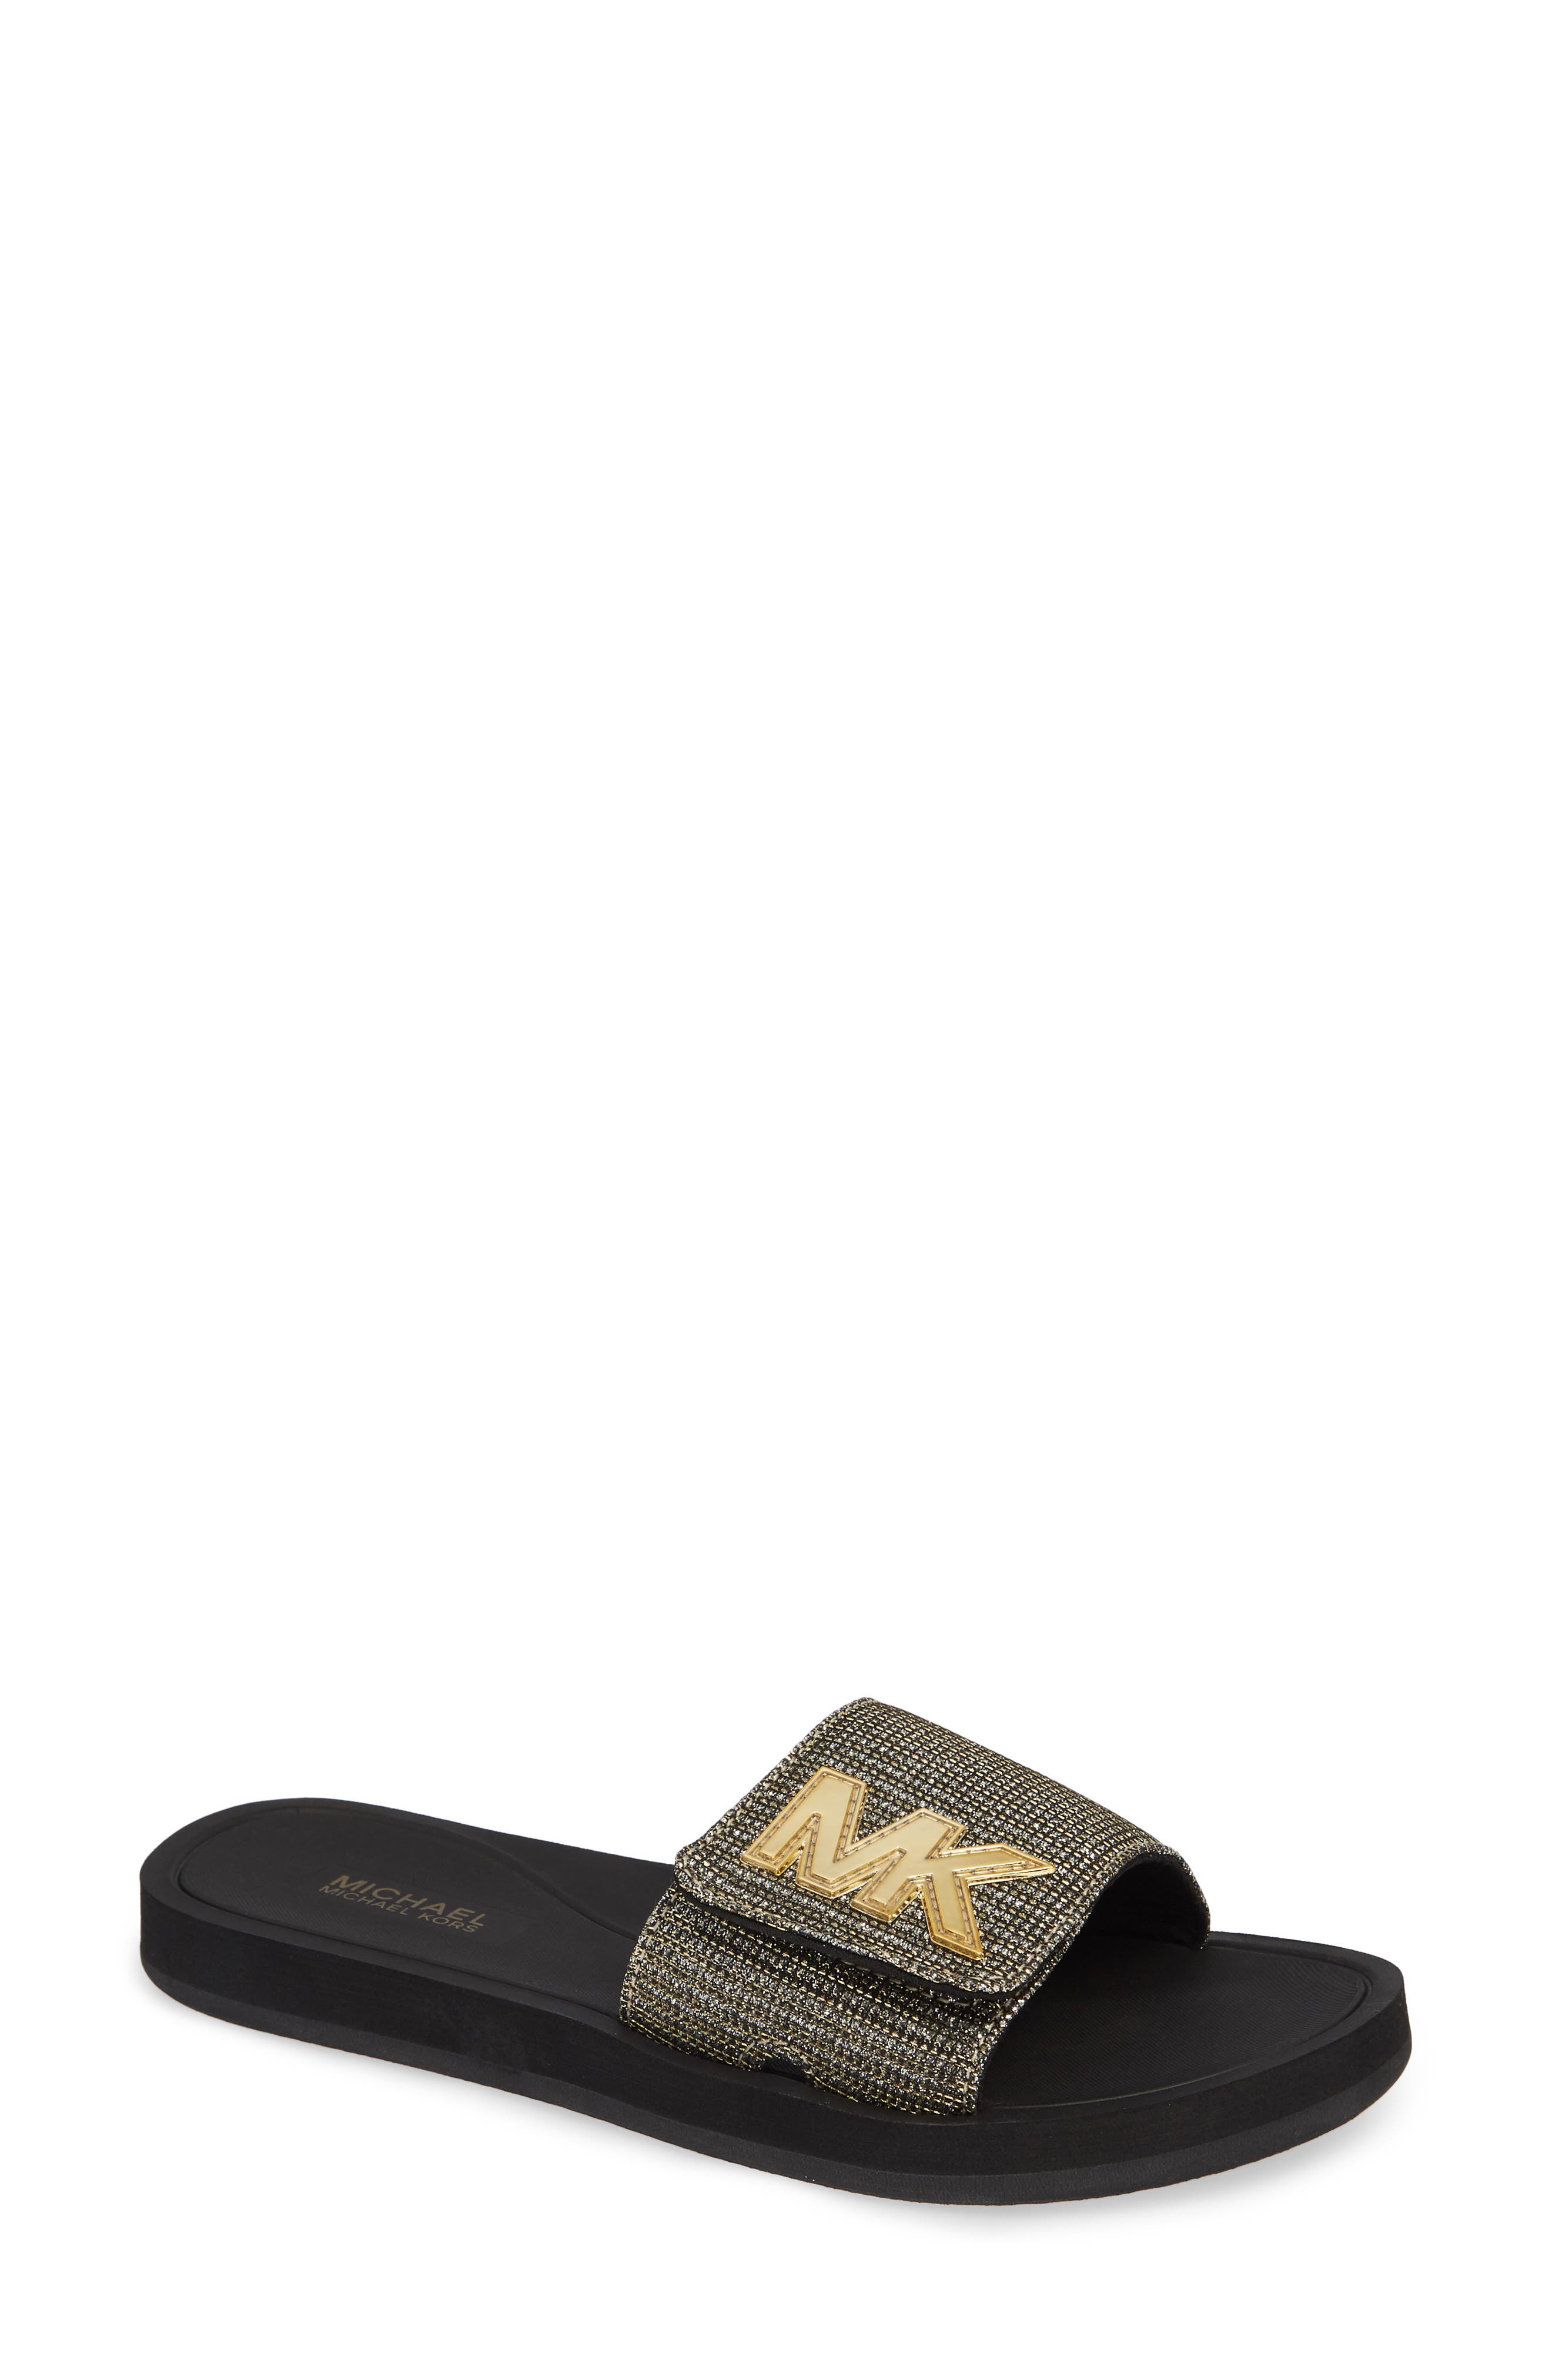 michael kors mk sandals